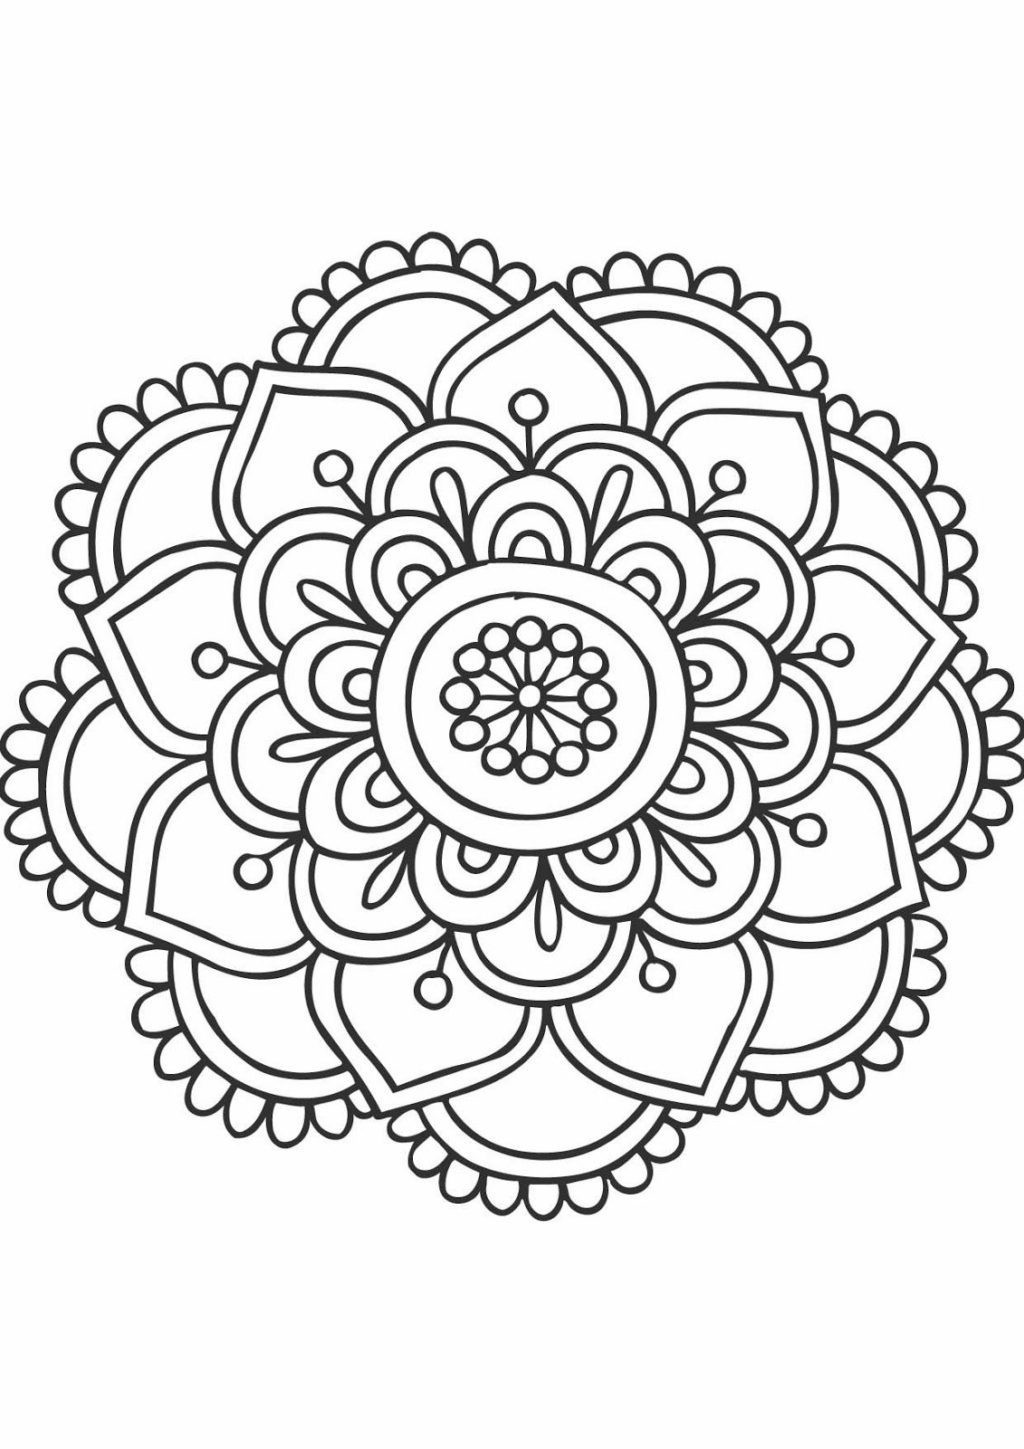 Mandala Embroidery Patterns Coloring Books Simple Mandala Coloring Pages Free Simple Mandala